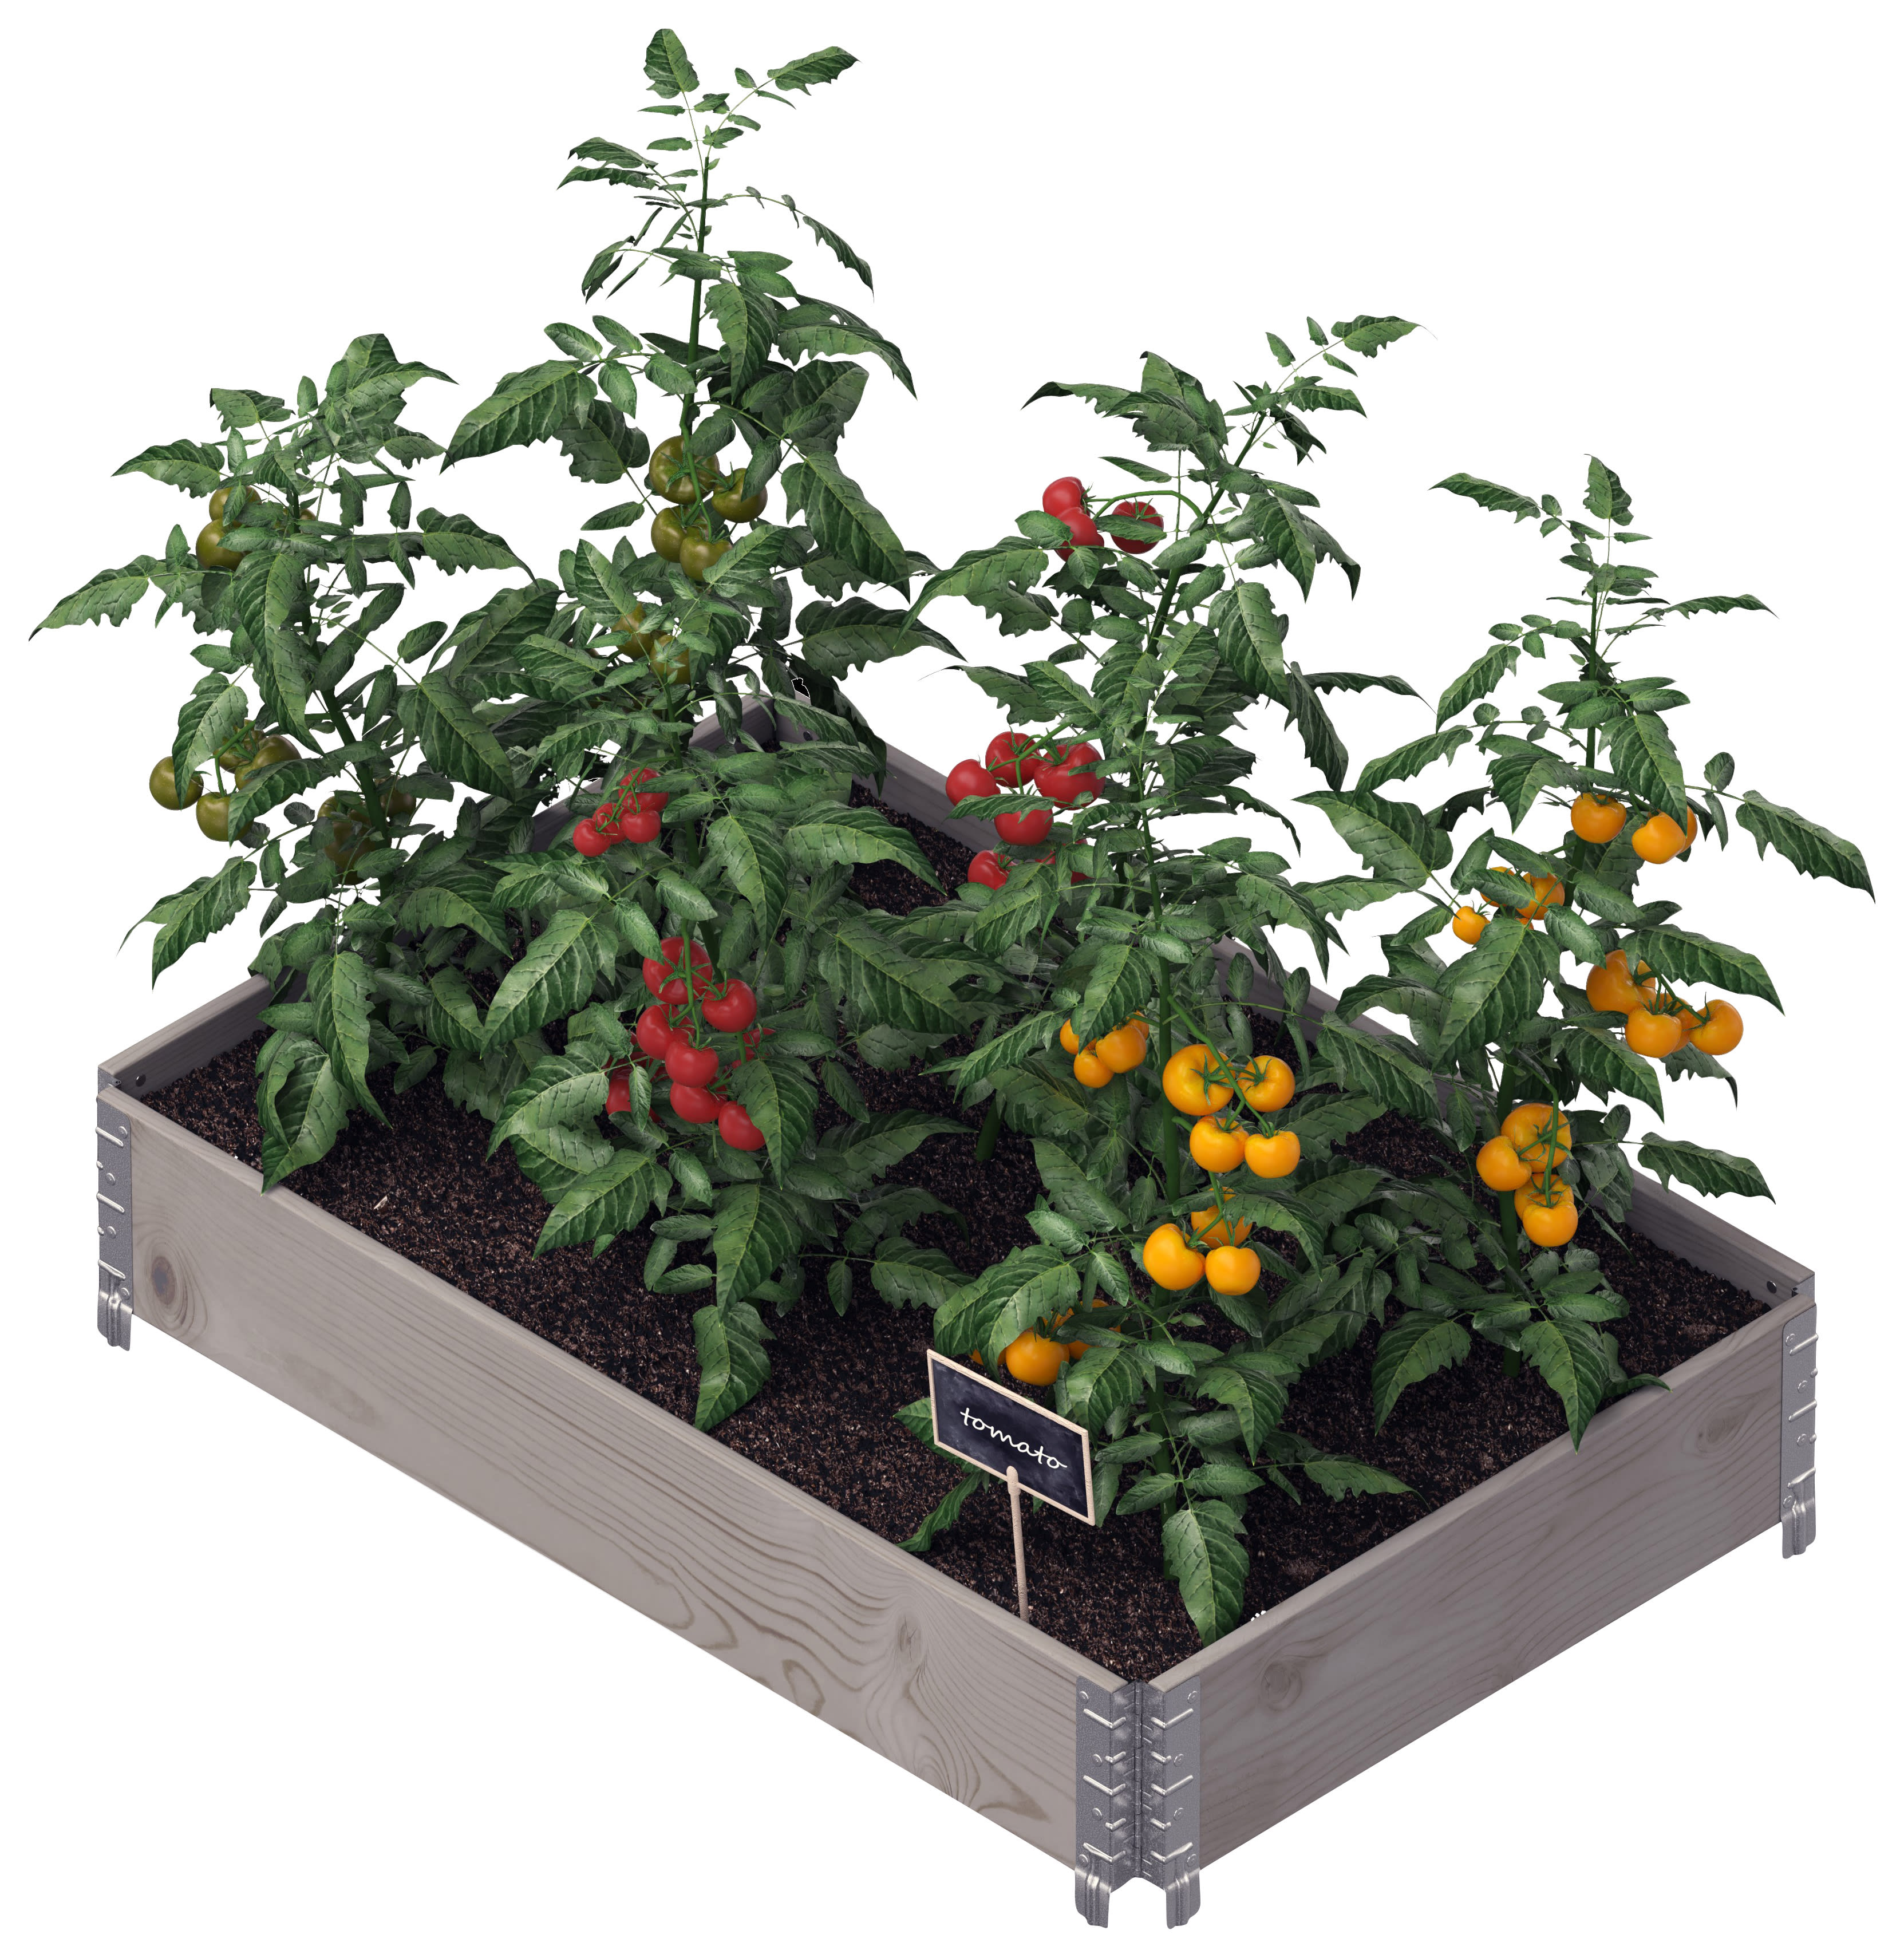 Upyard Eco Grey Garden Box Raised Bed -